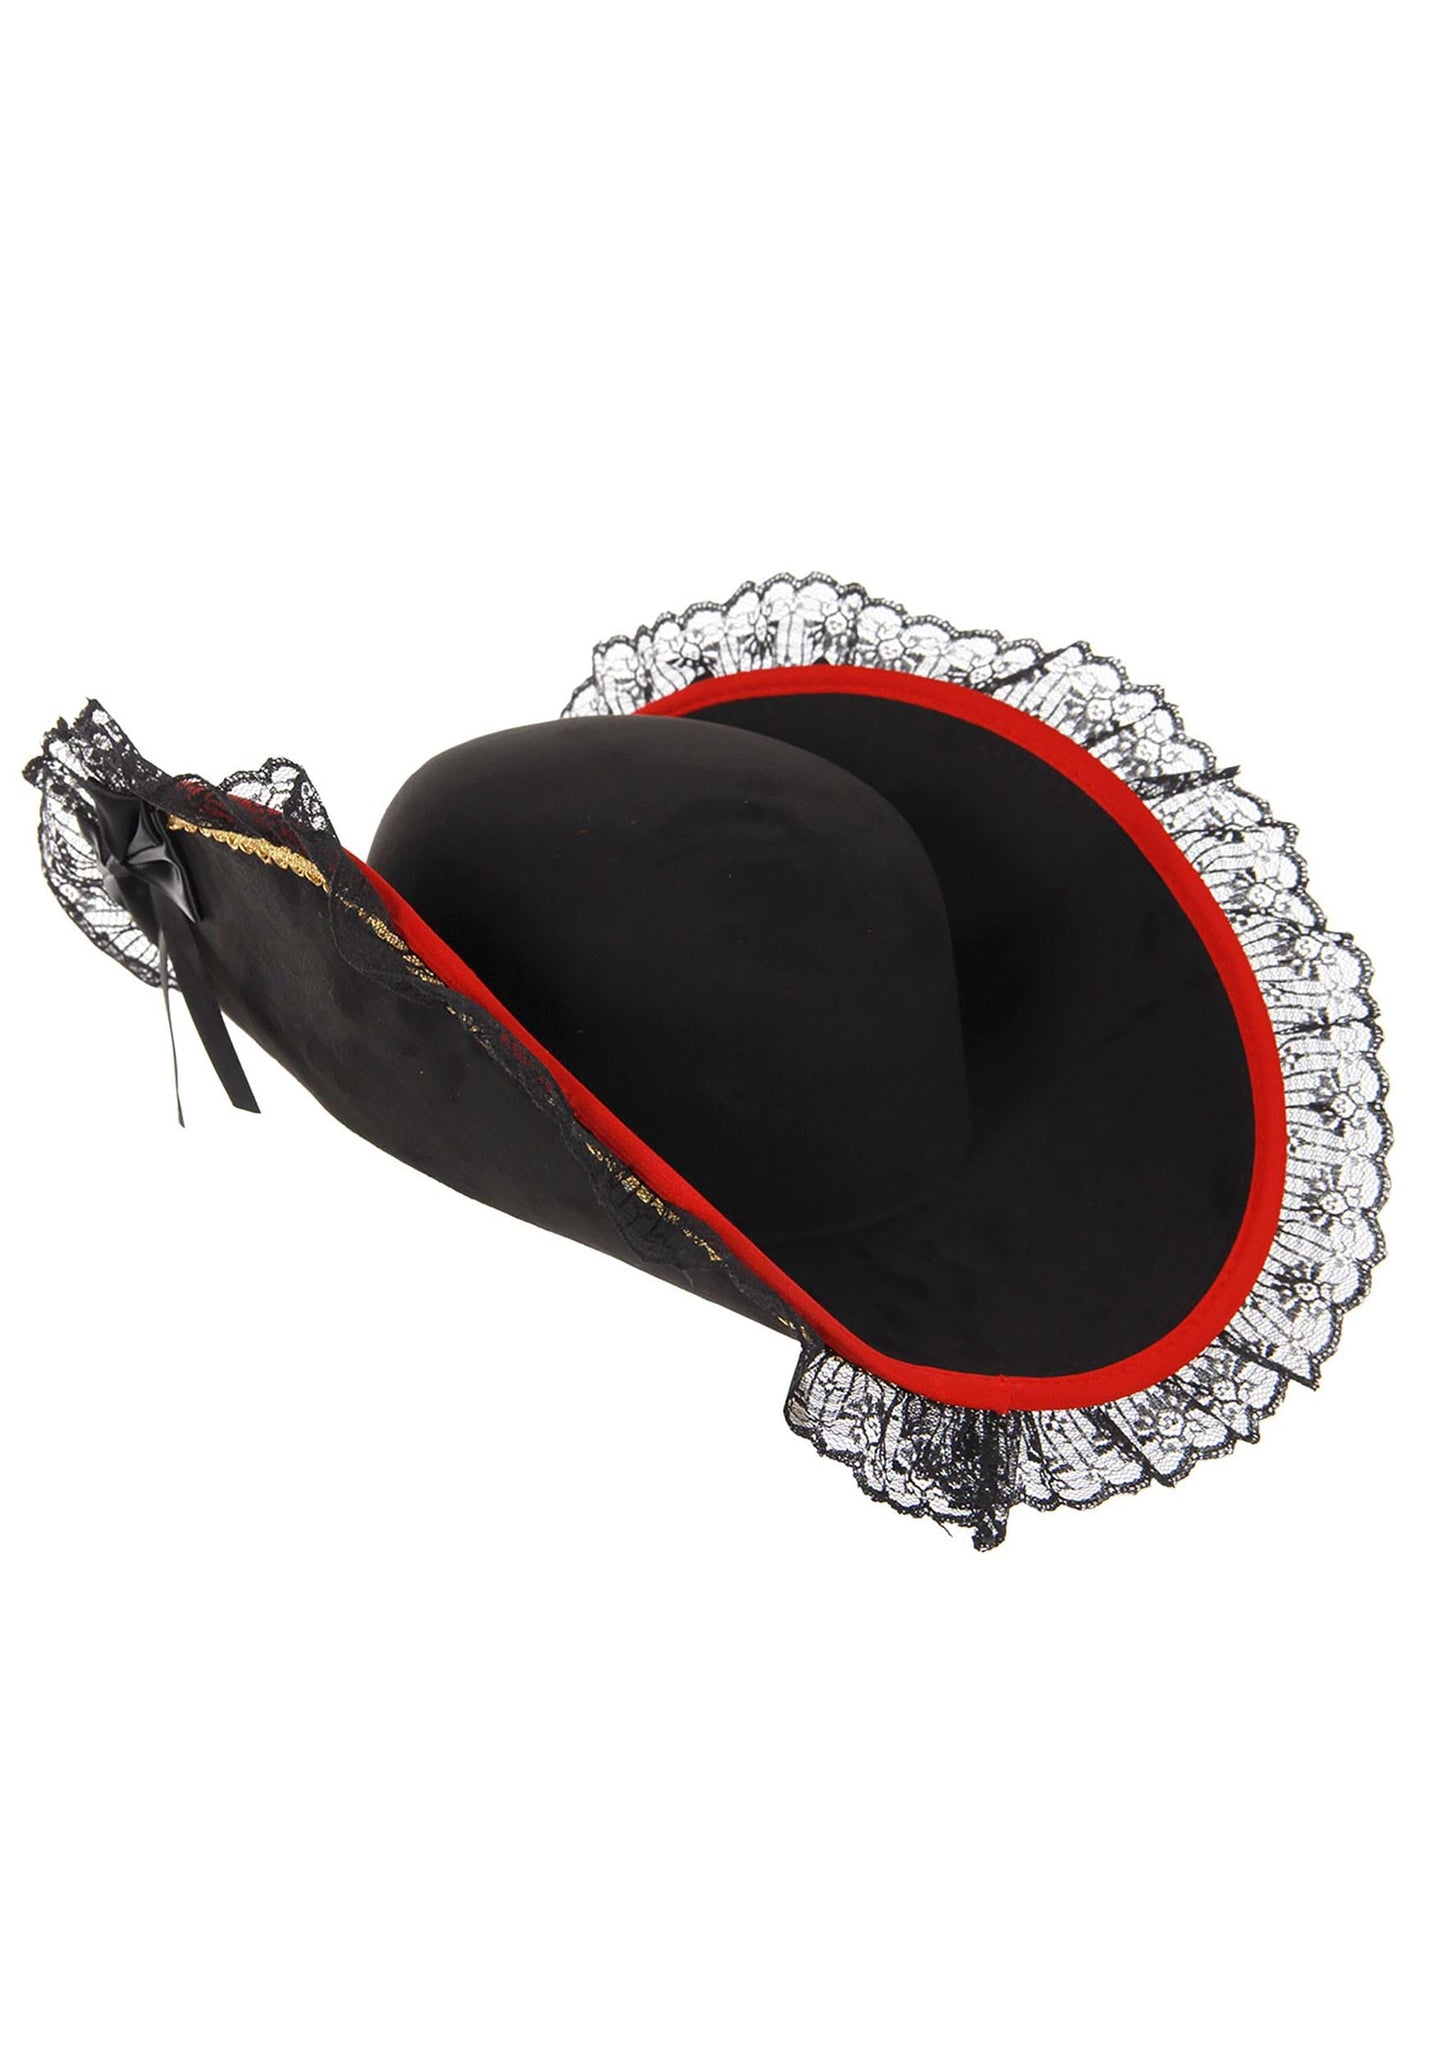 Lady Buccaneer Black Hat